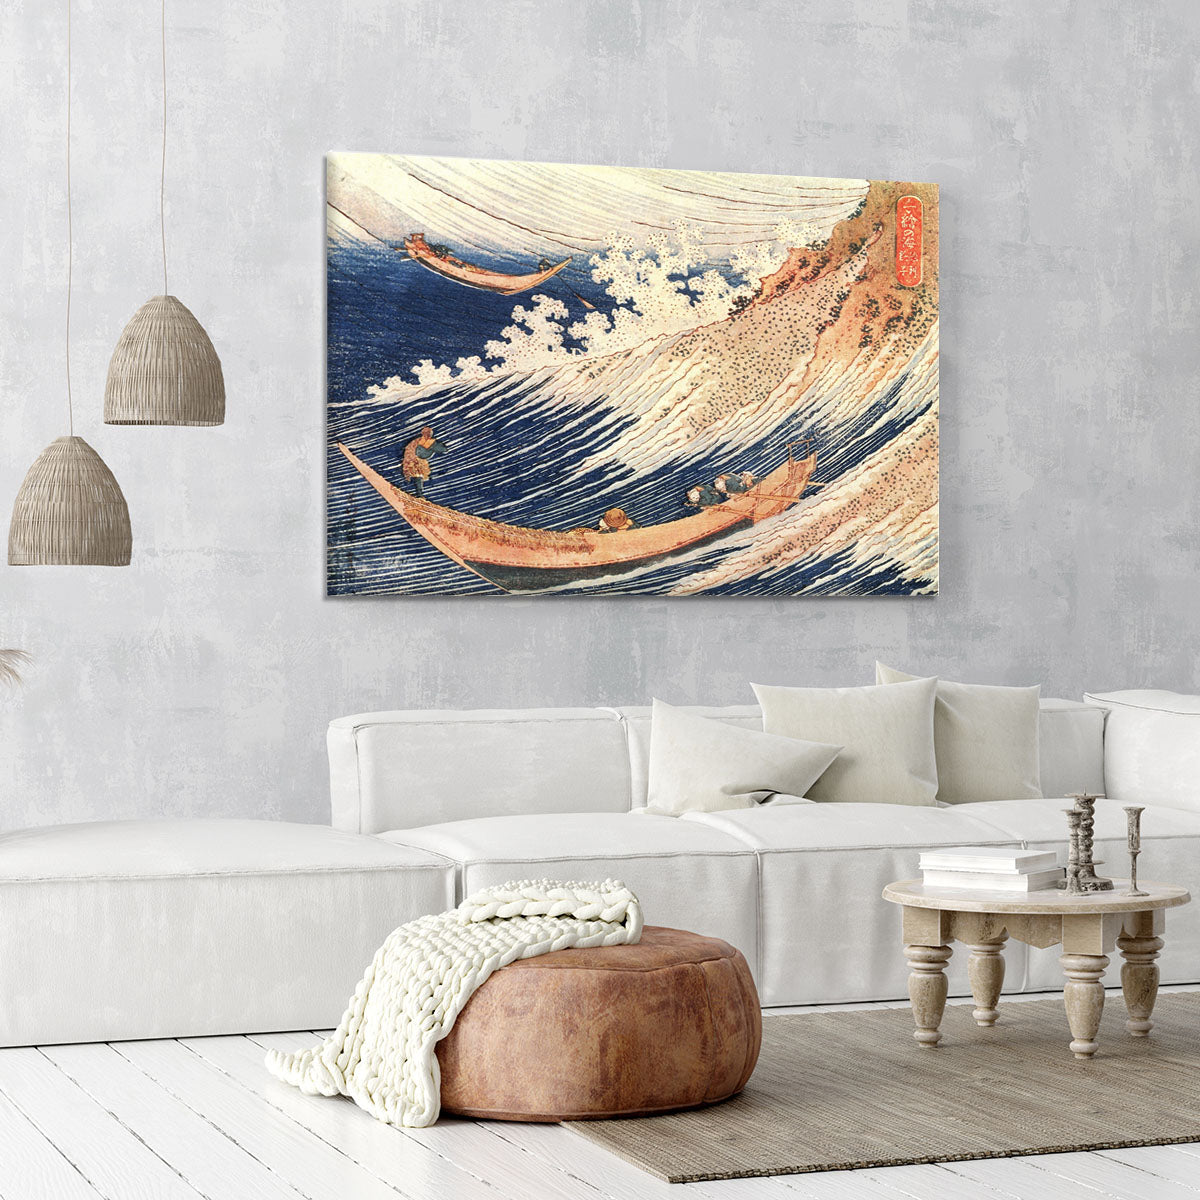 A Wild Sea at Choshi by Hokusai Canvas Print or Poster - Canvas Art Rocks - 6